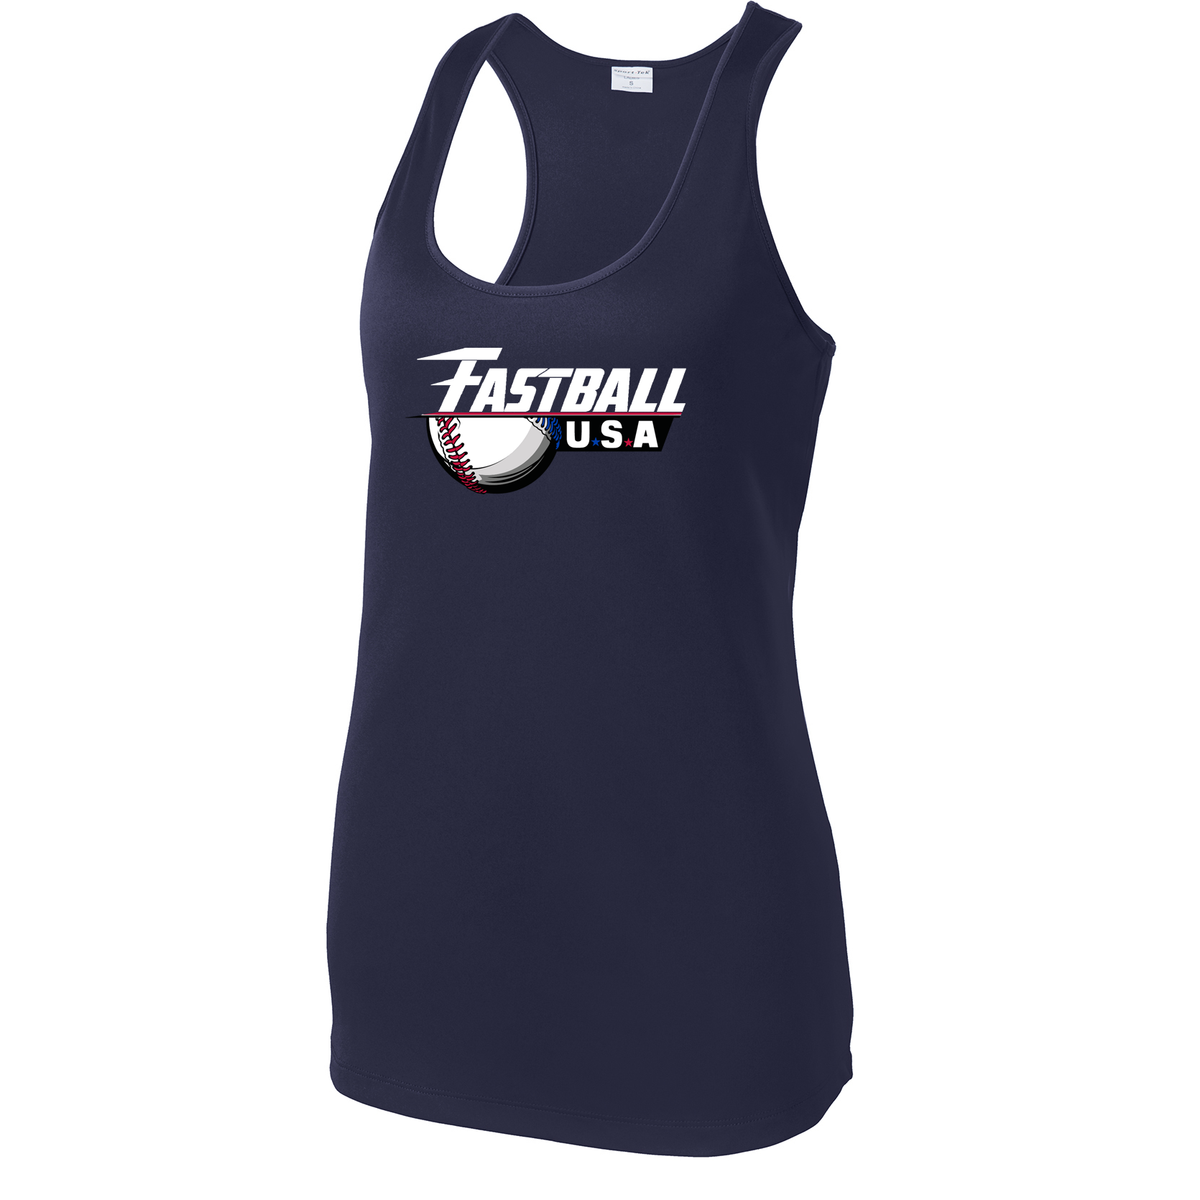 Fastball USA Academy Baseball Women's Racerback Tank